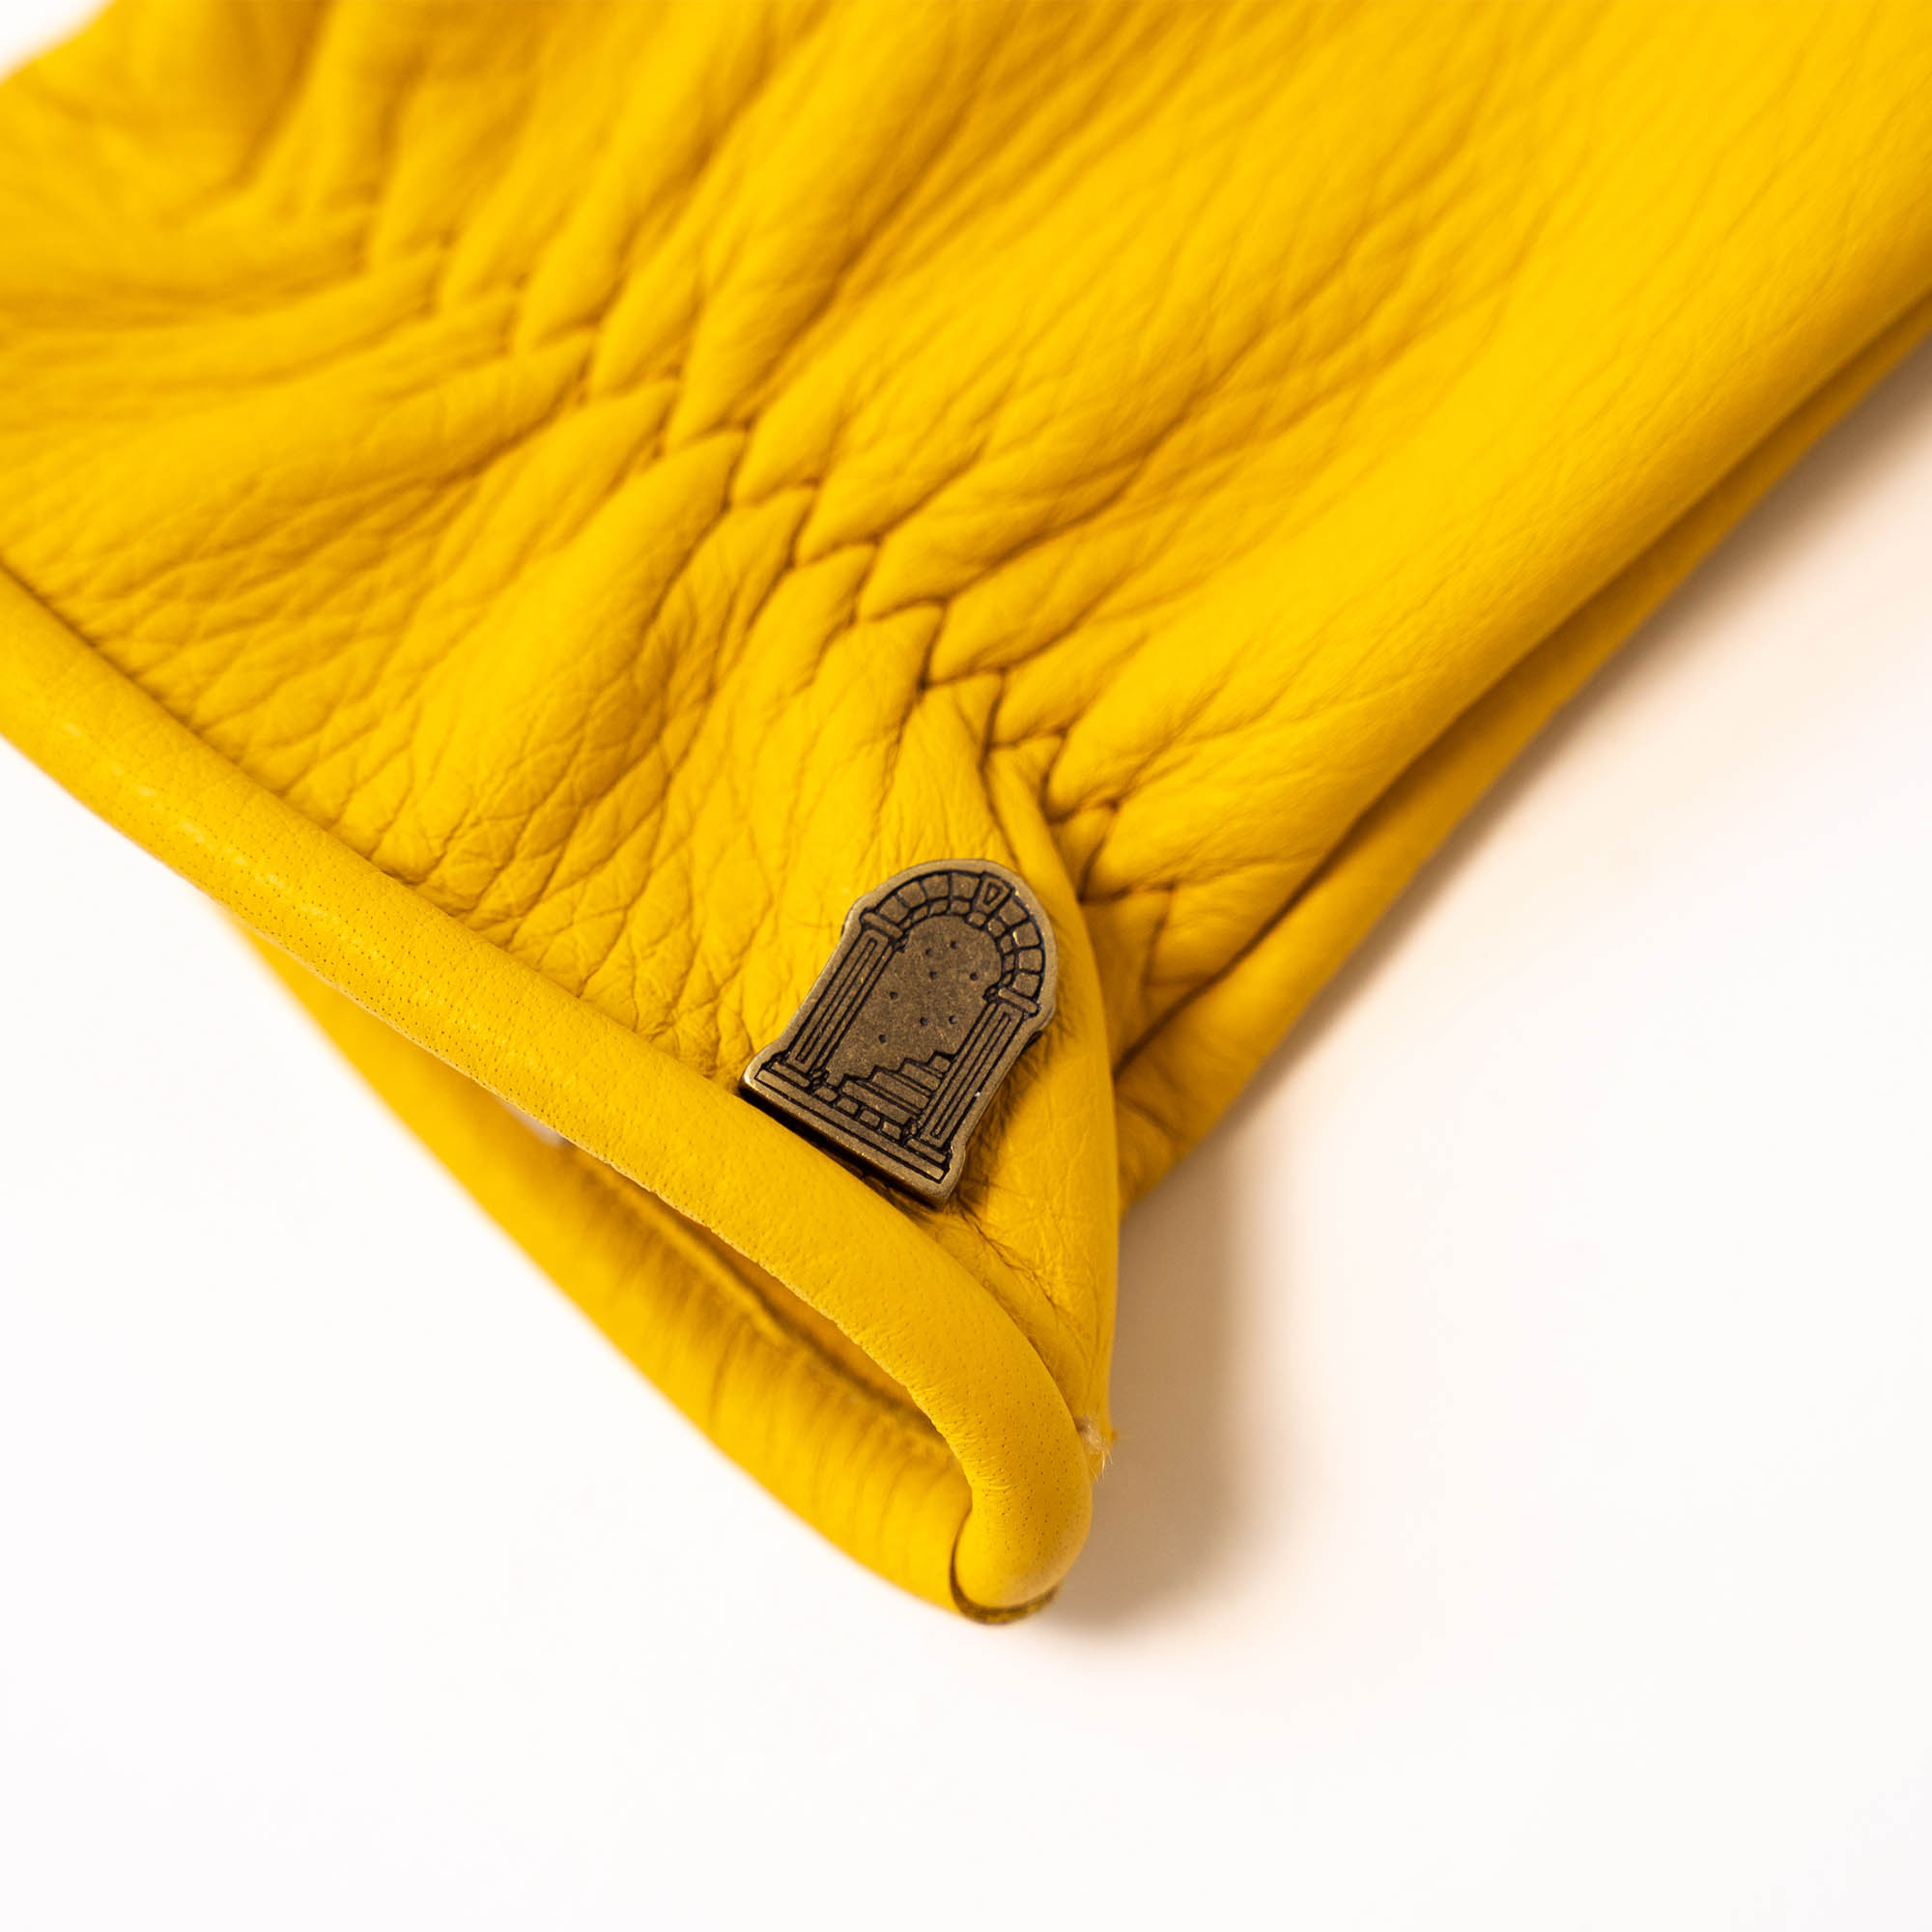 "Bandit" Yellow Deerskin Gloves